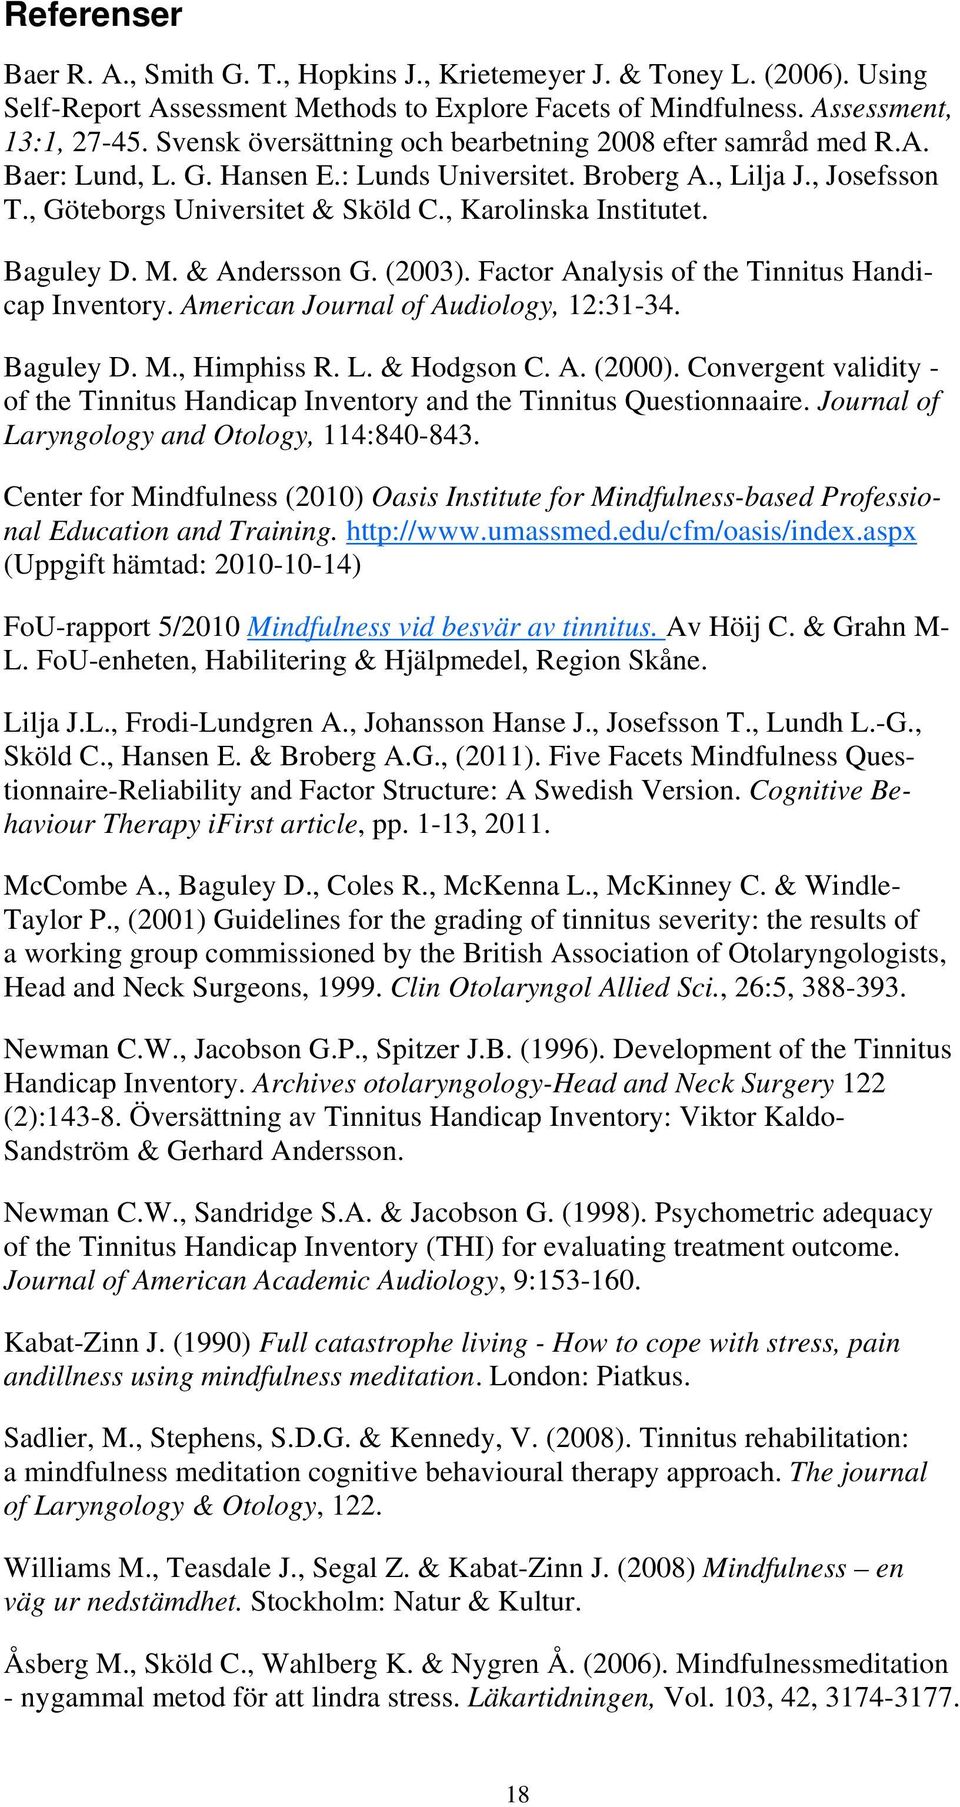 , Karolinska Institutet. Baguley D. M. & Andersson G. (2003). Factor Analysis of the Tinnitus Handicap Inventory. American Journal of Audiology, 12:31-34. Baguley D. M., Himphiss R. L. & Hodgson C. A. (2000).